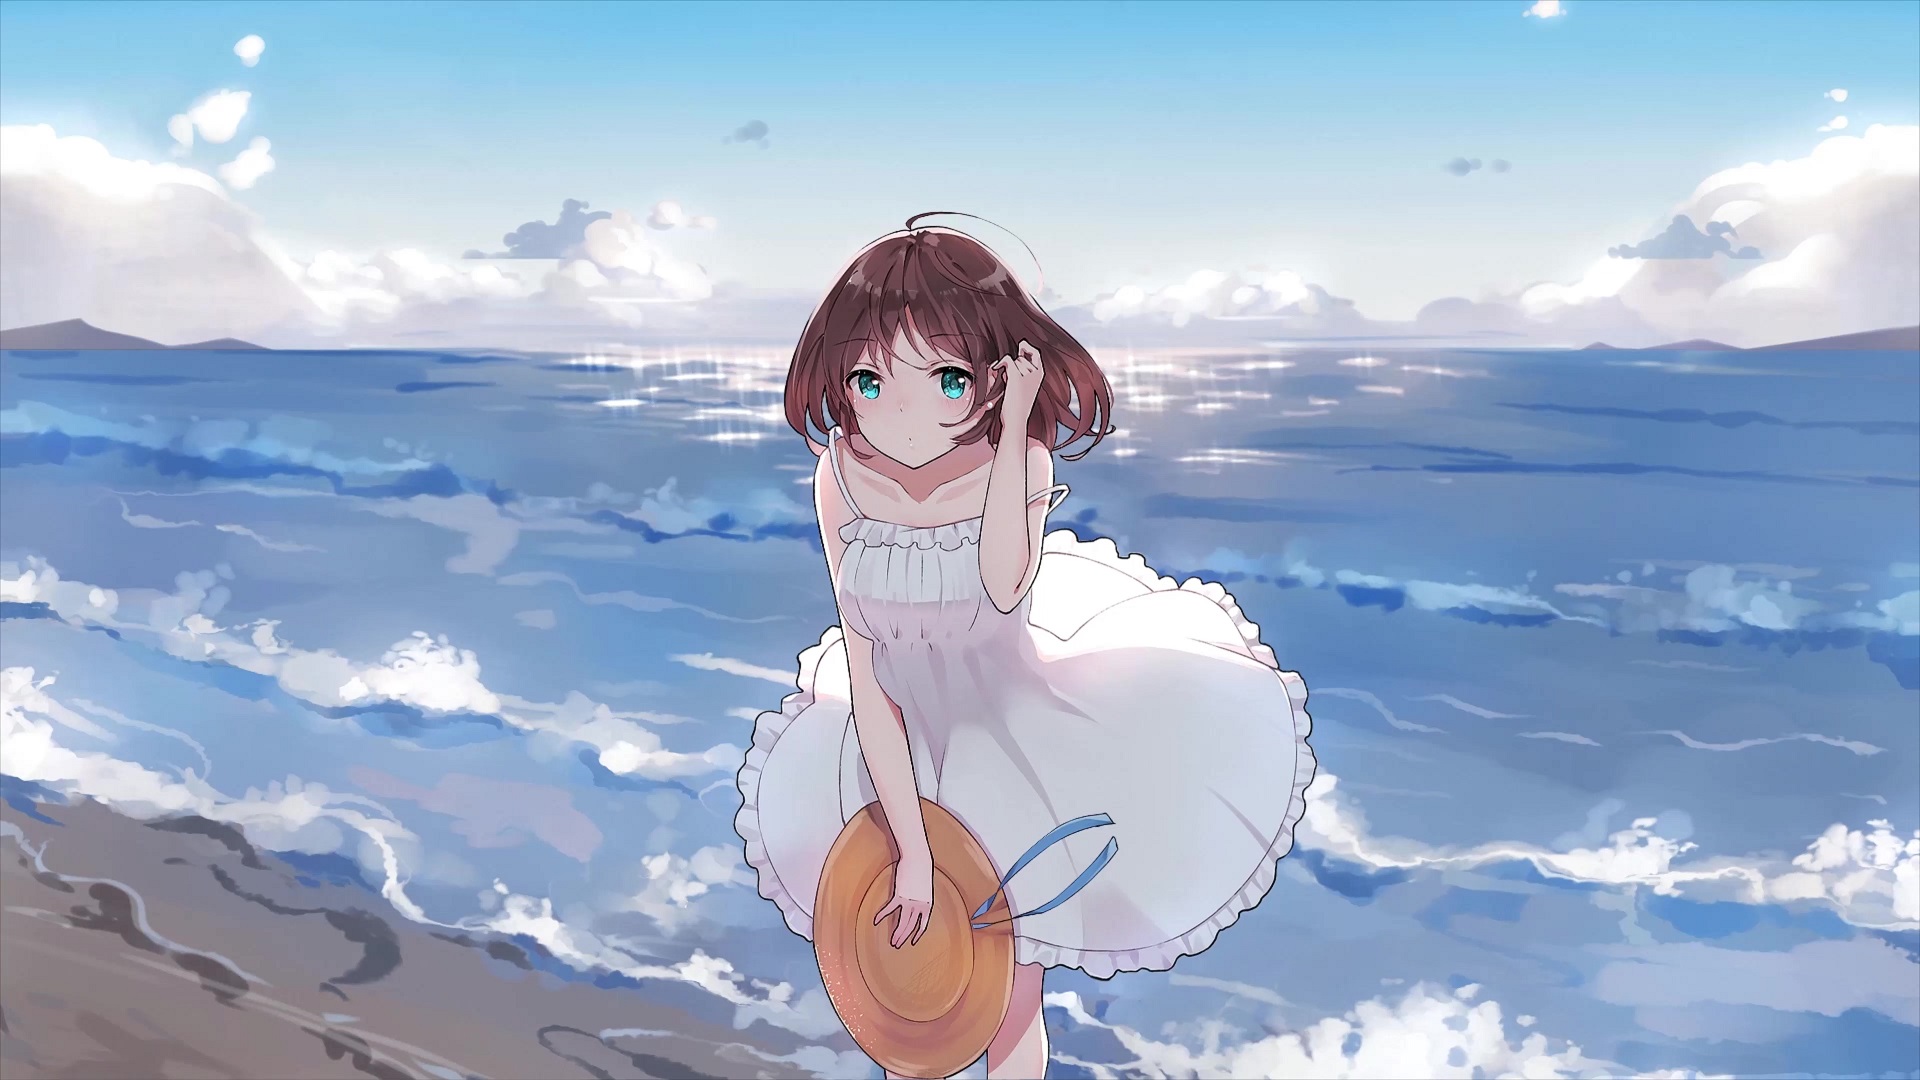 Anime Art Boy And Girl Friendship To Love Beach by mdkamran1 on DeviantArt